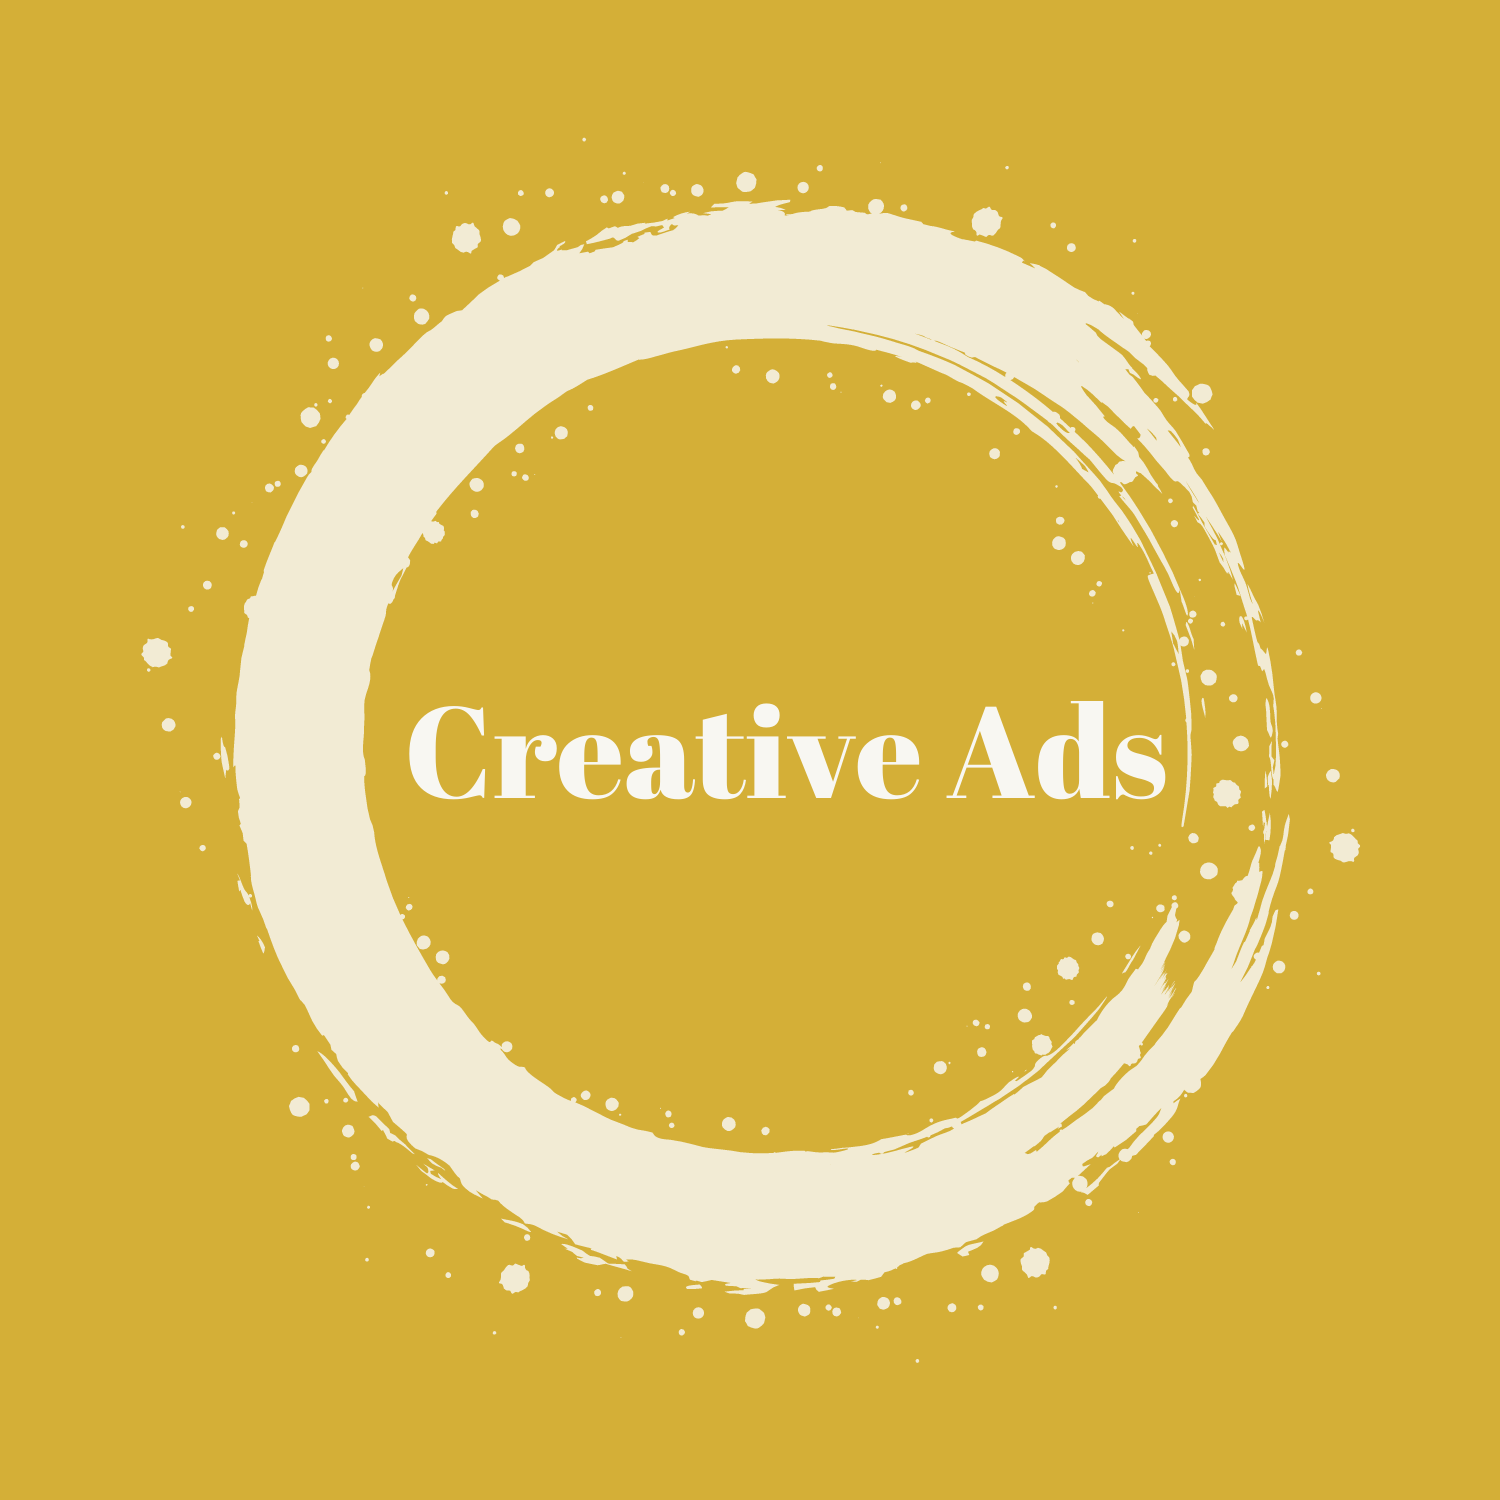 Creative Ads